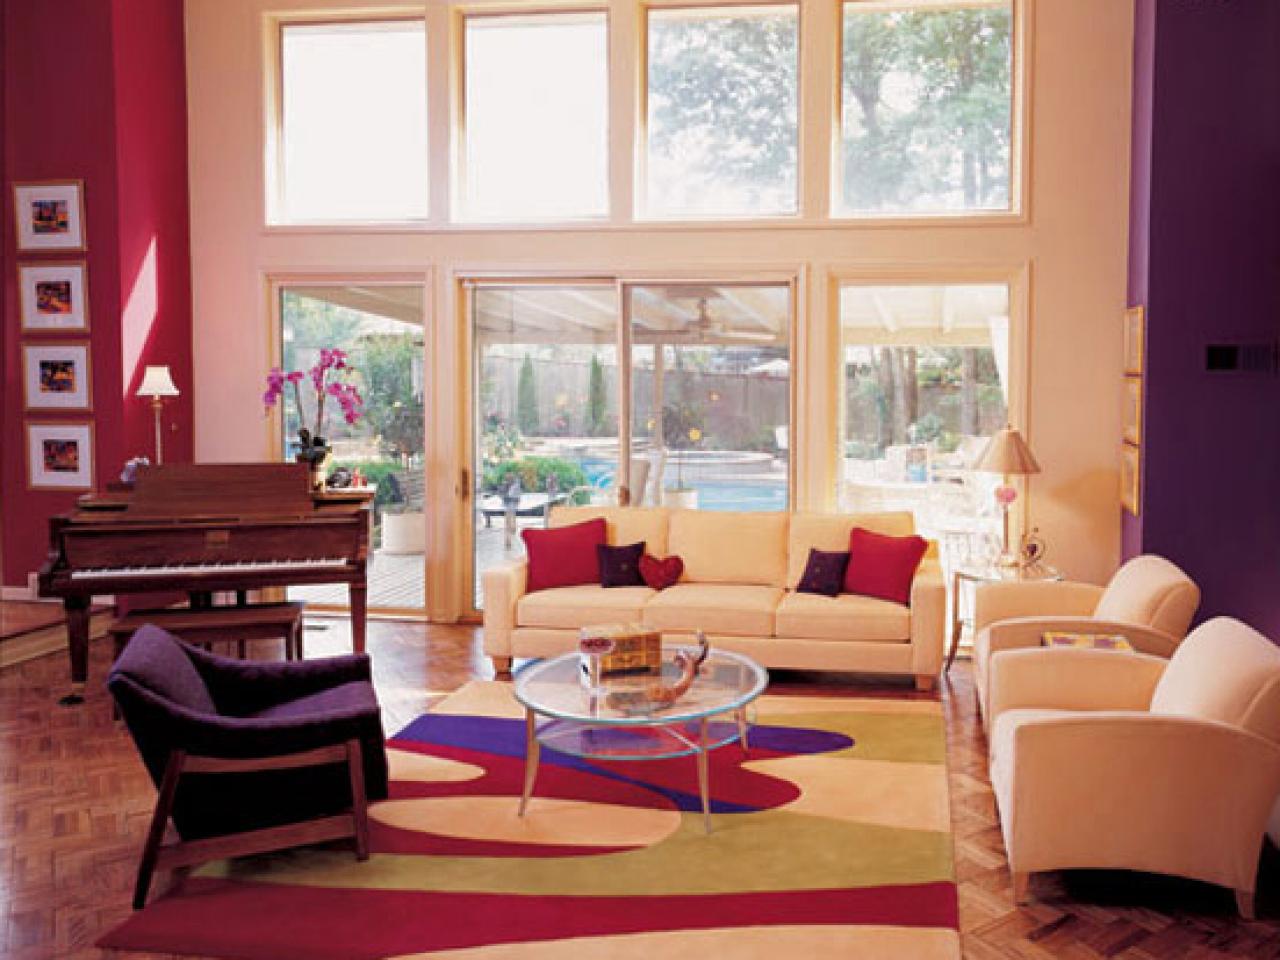 How To Choose A Color Scheme 8 Tips, Home Decor Colour Schemes